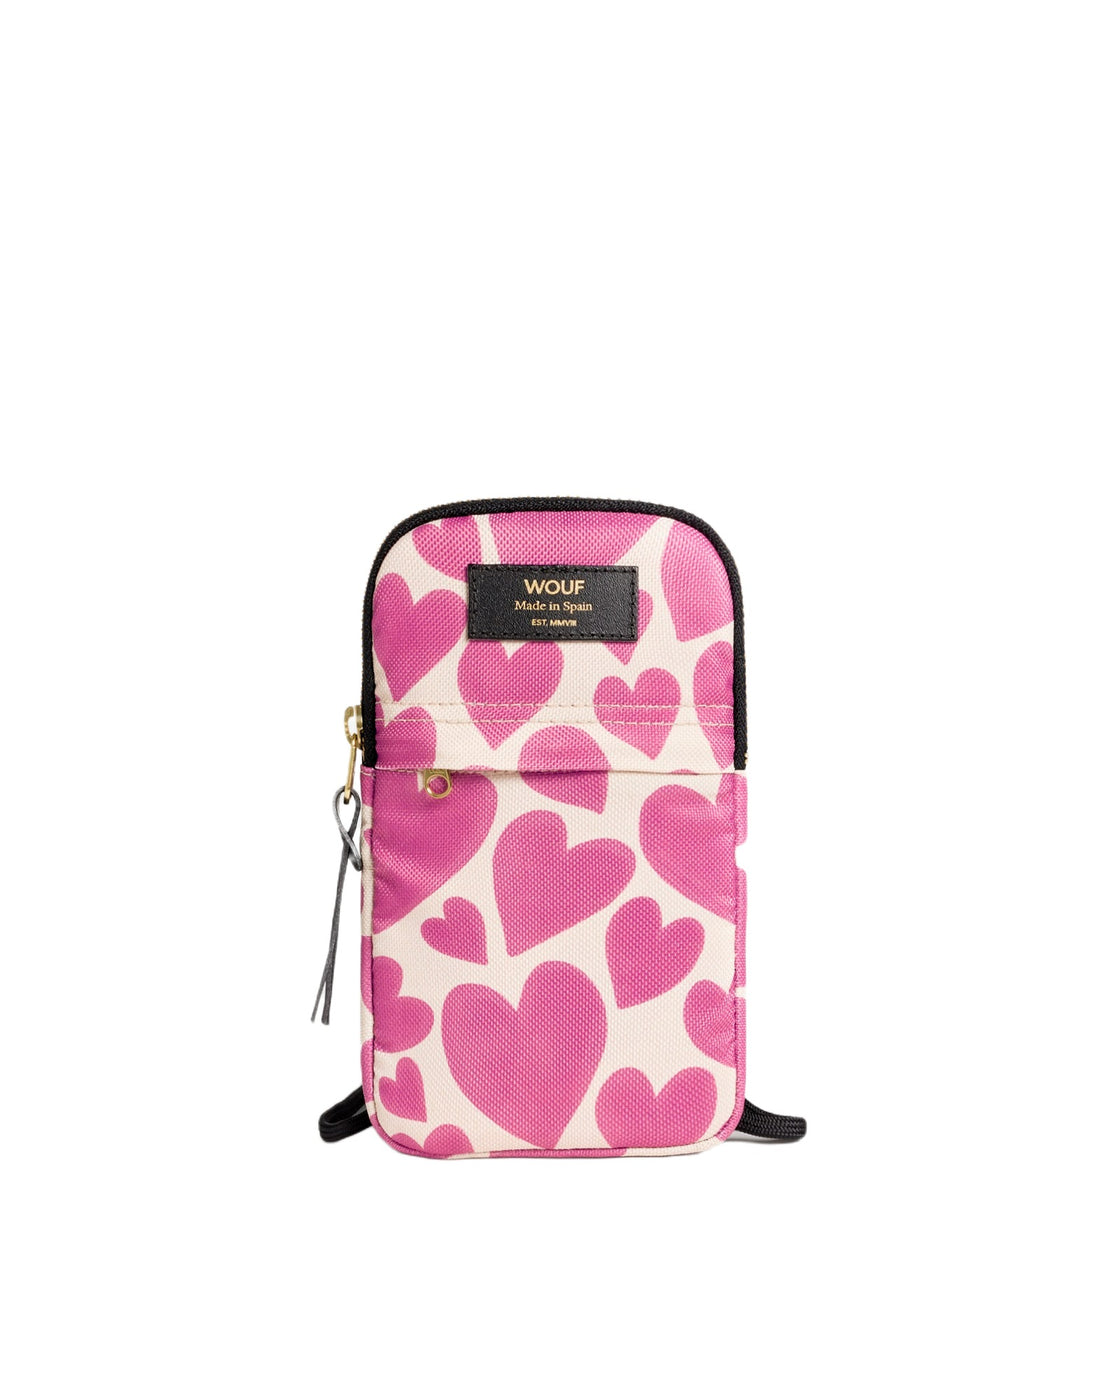 WOUF Phone Bag Pink Love